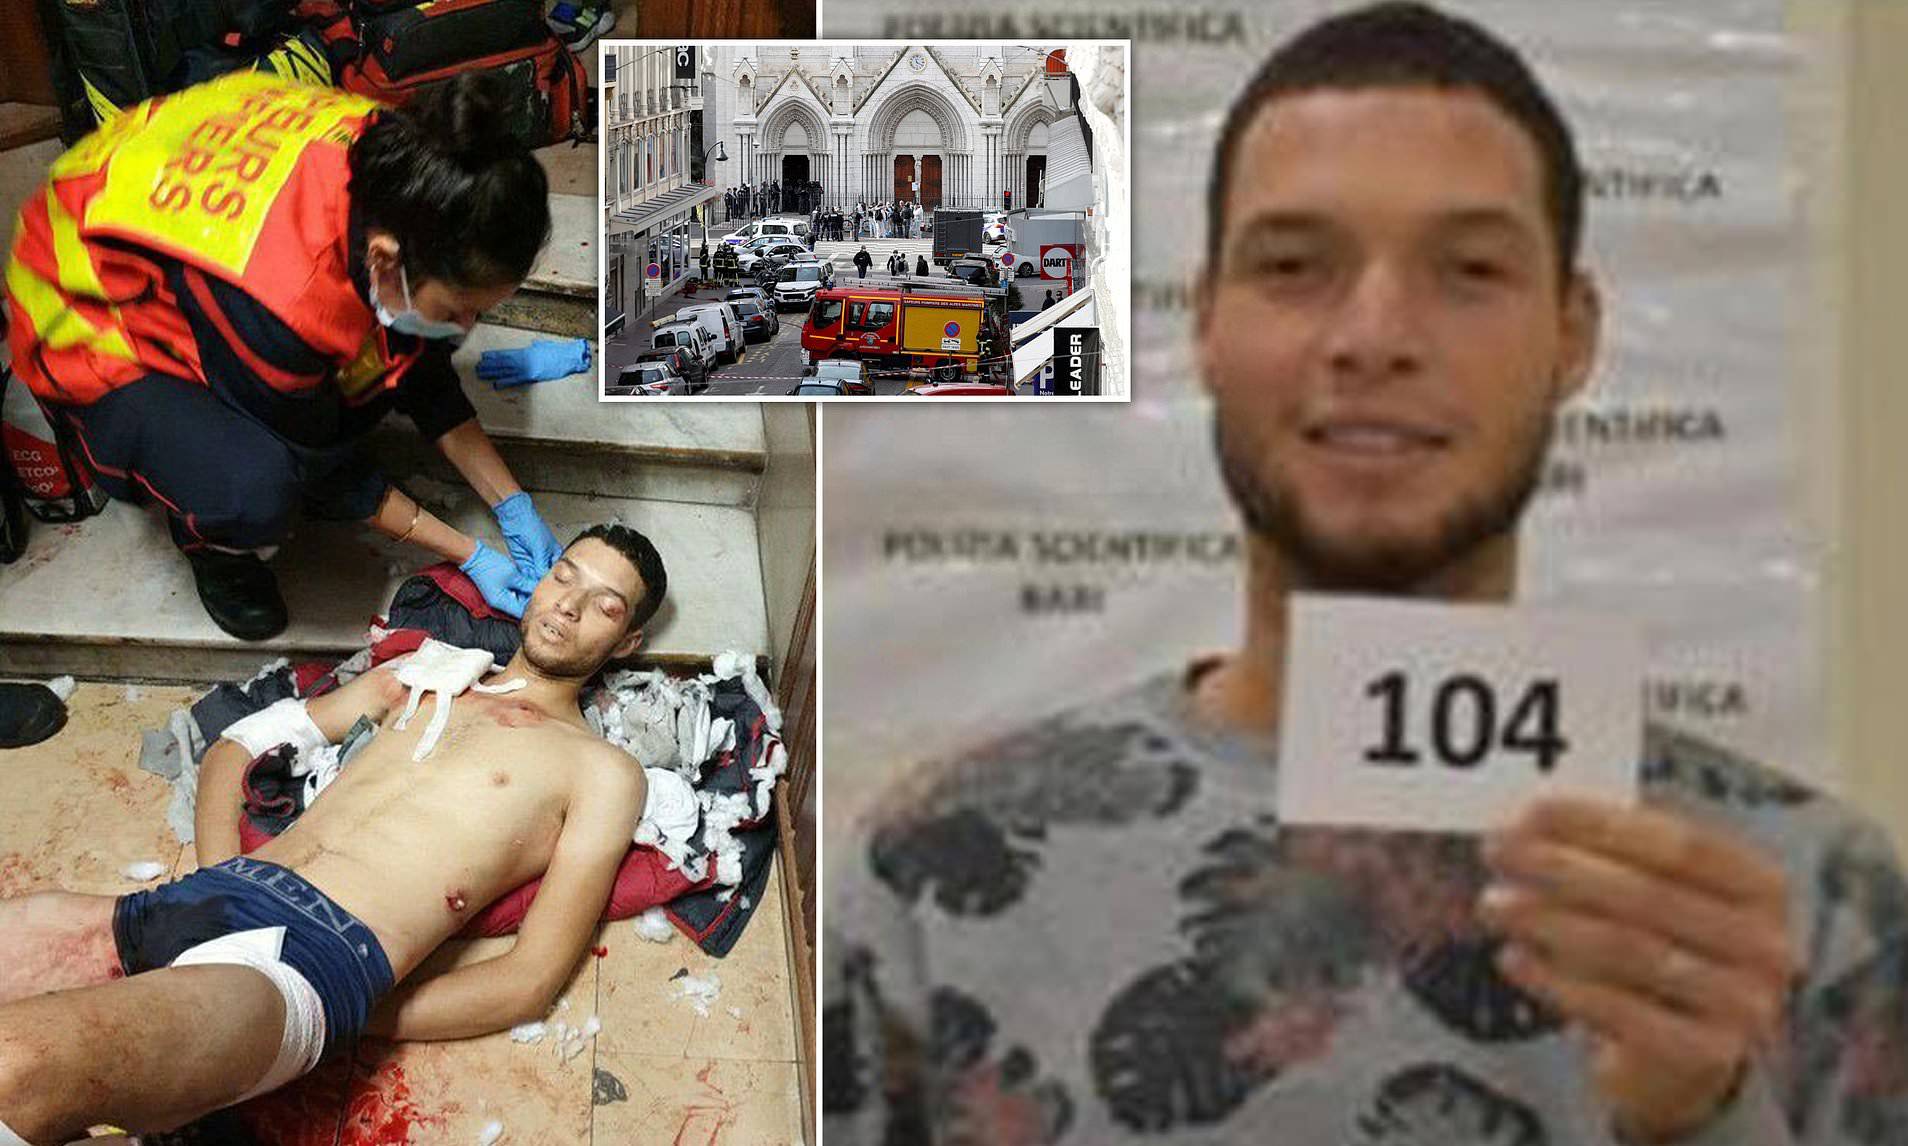 GFATF - LLL - Tunisian terrorist who attacked church in Nice tests positive for coronavirus